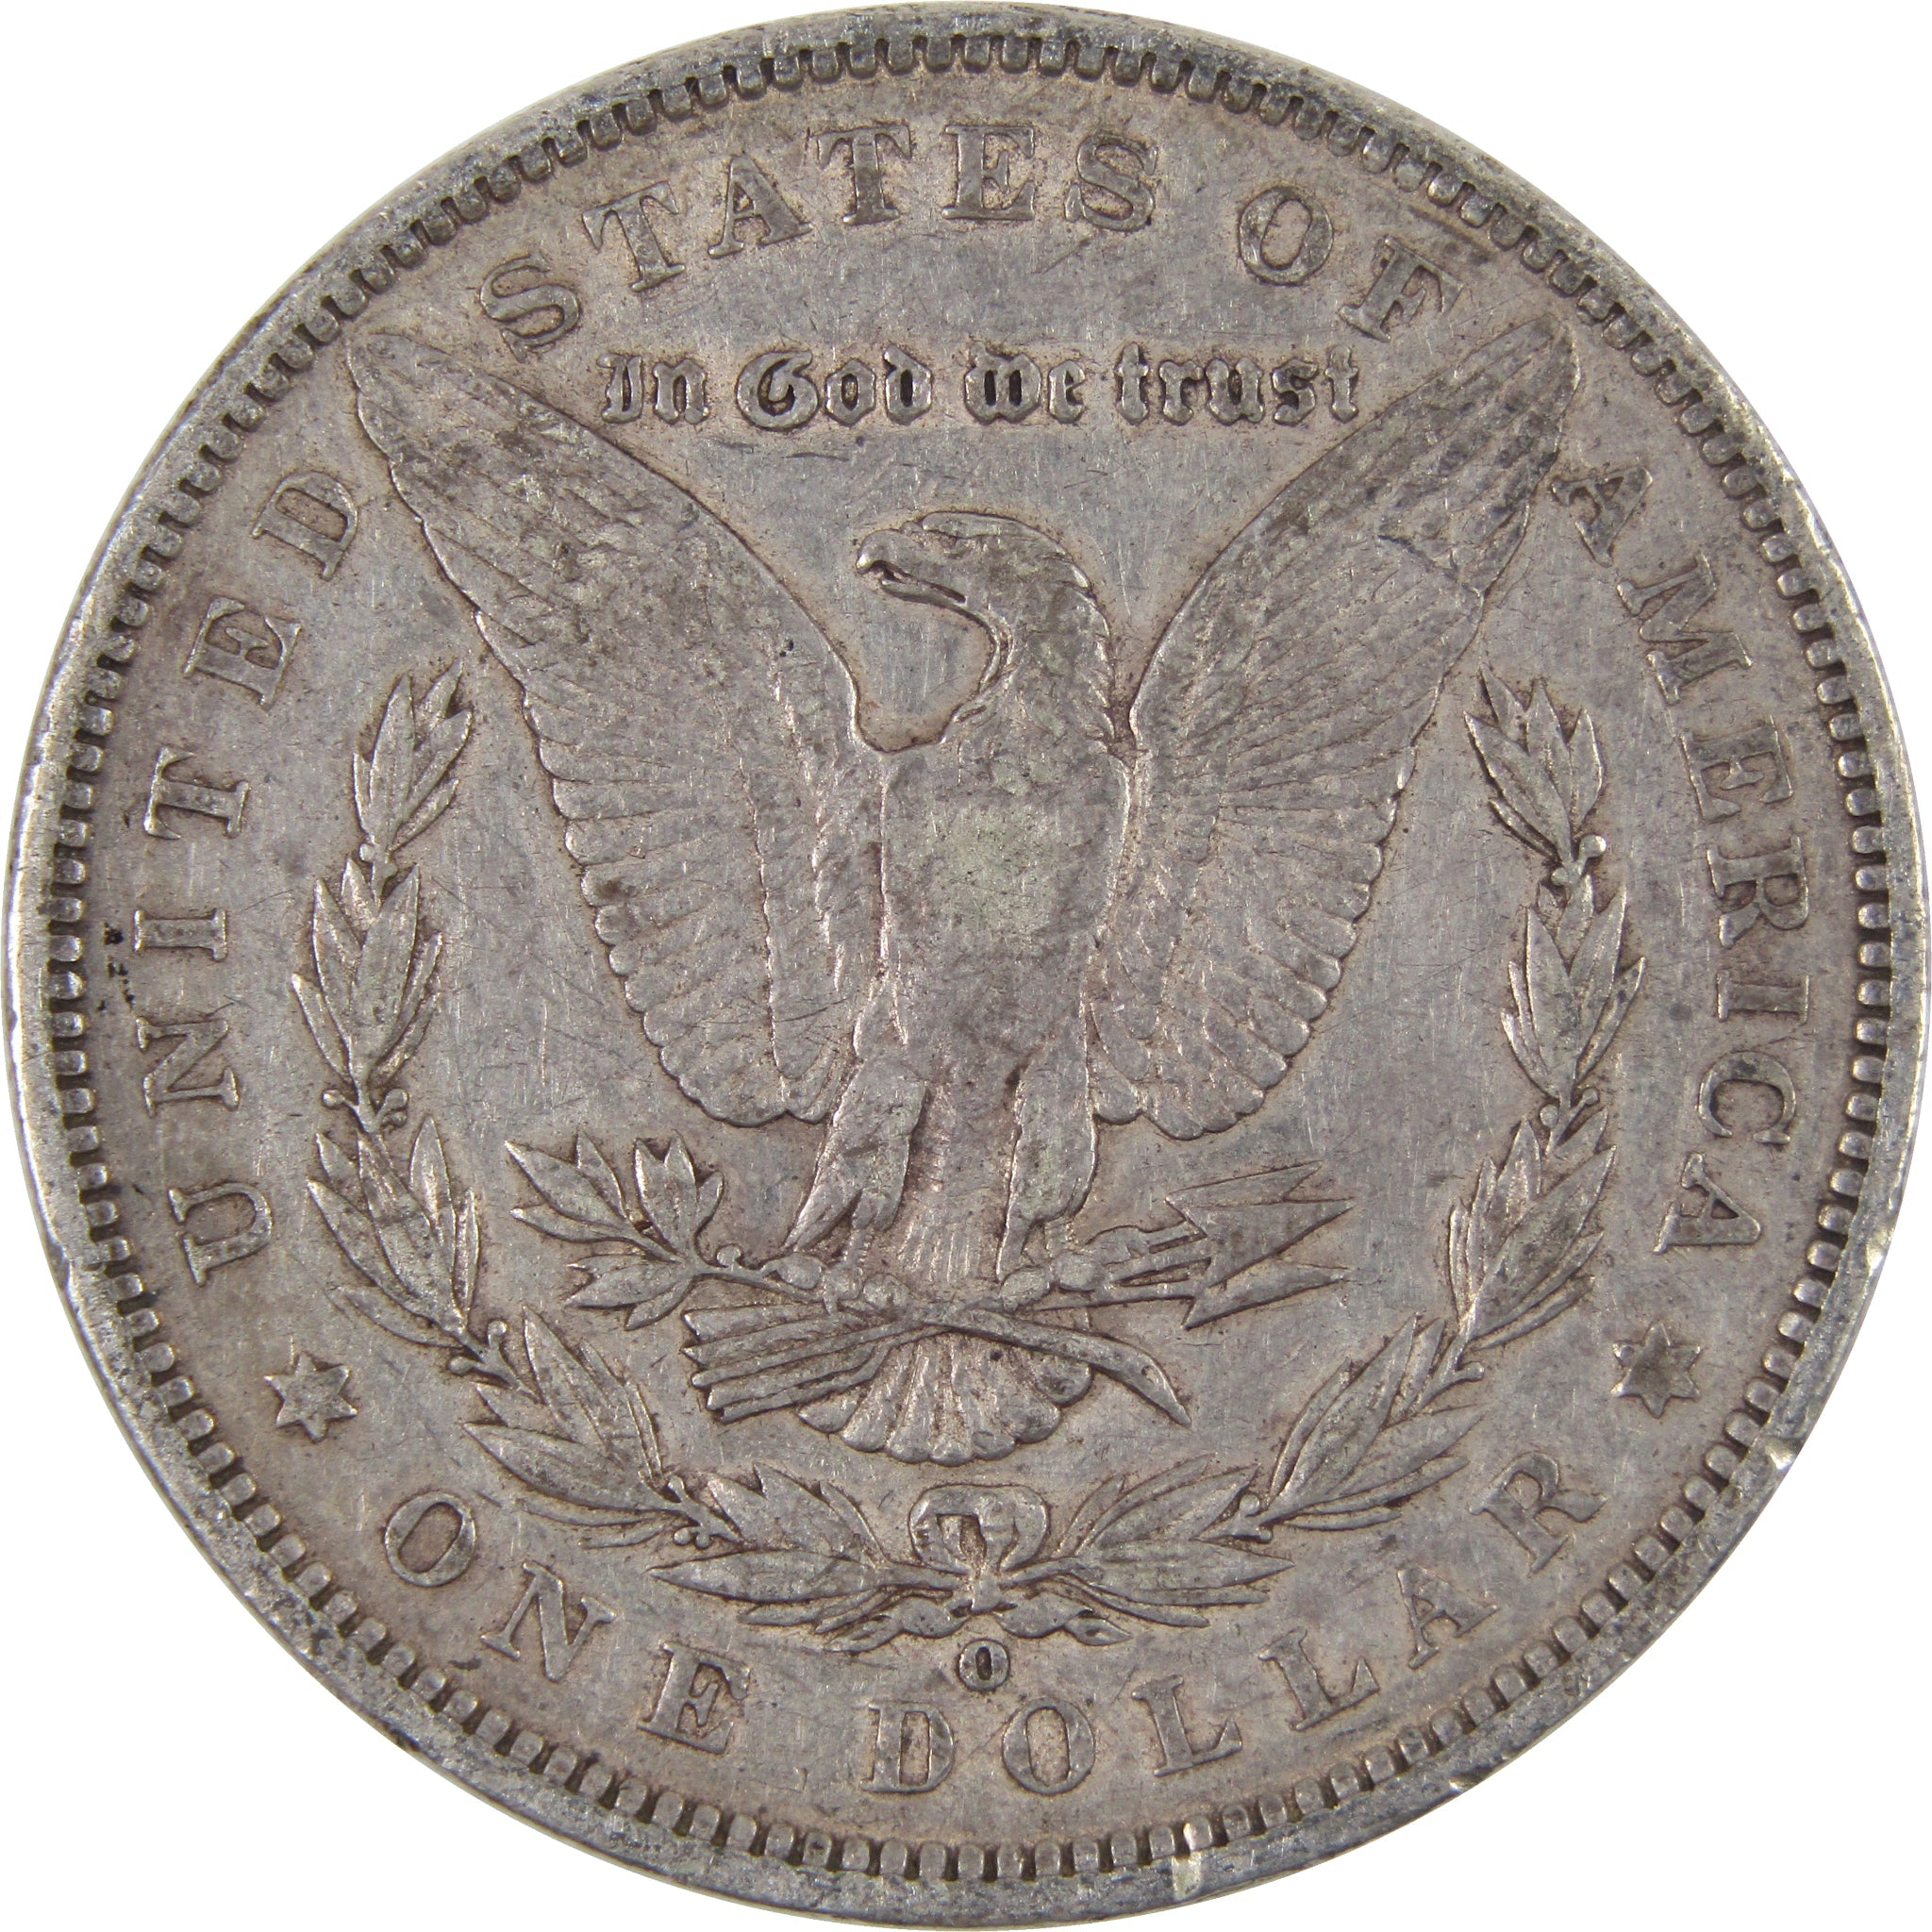 1886 O Morgan Dollar VF Very Fine 90% Silver US Coin SKU:I2417 - Morgan coin - Morgan silver dollar - Morgan silver dollar for sale - Profile Coins &amp; Collectibles